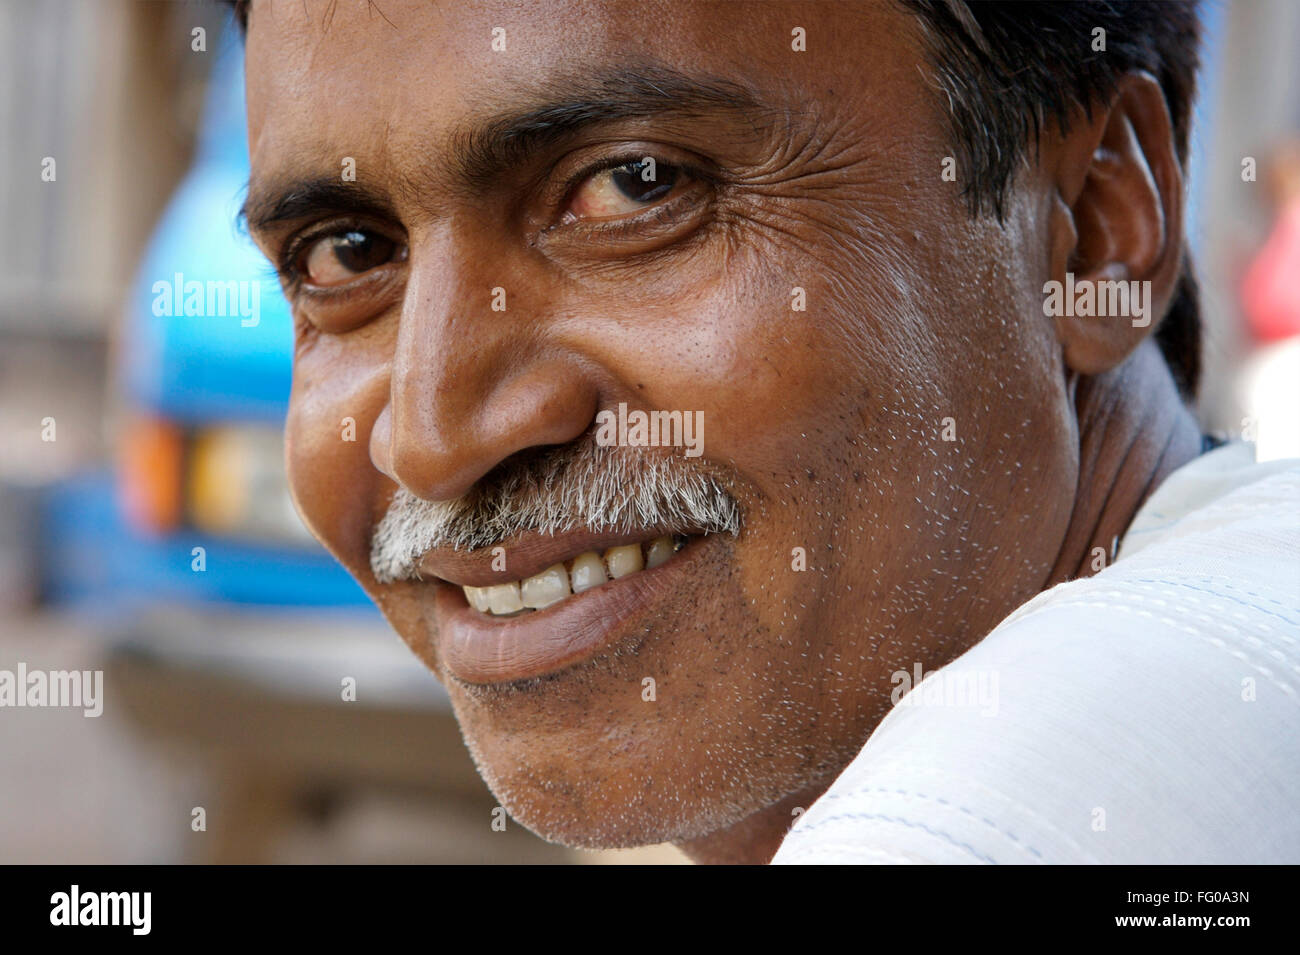 Gujarati man smiling MR#711 Stock Photo